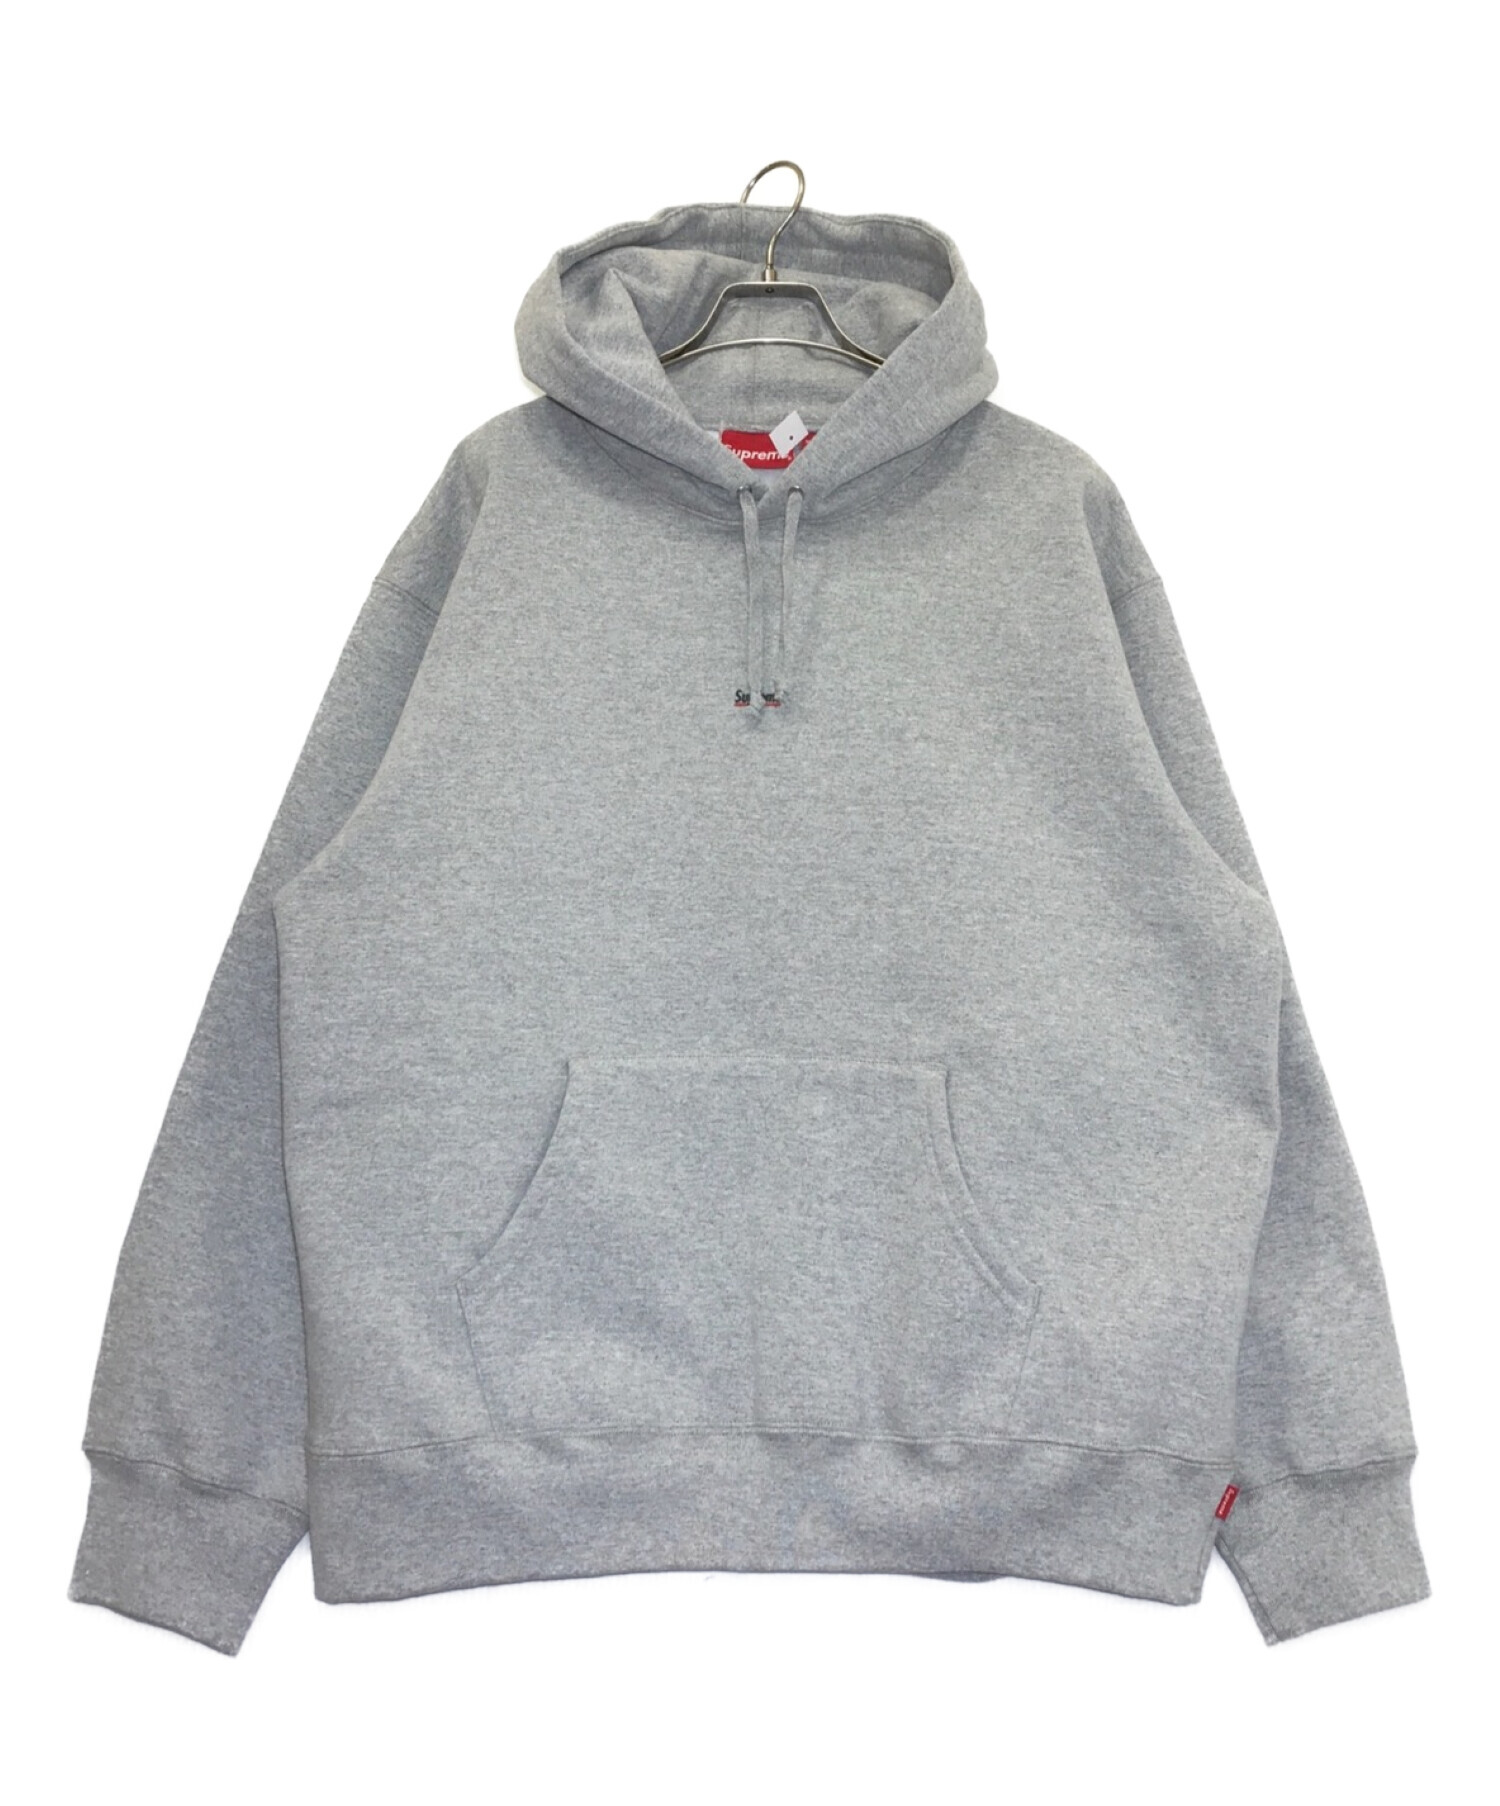 Supreme (シュプリーム) underline hooded sweatshirt グレー サイズ:L